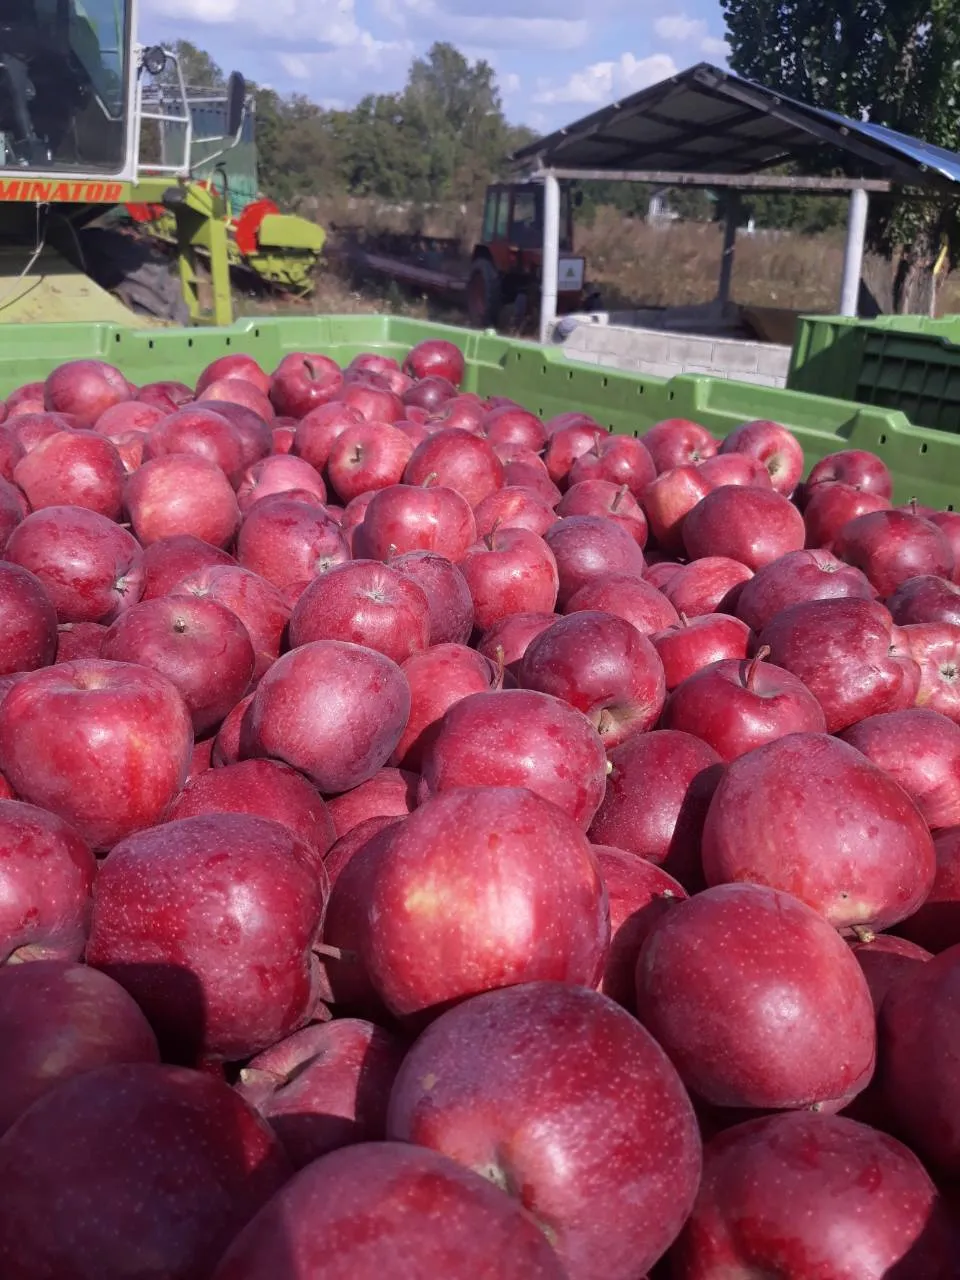 яблоки от Молдавских производителей 4